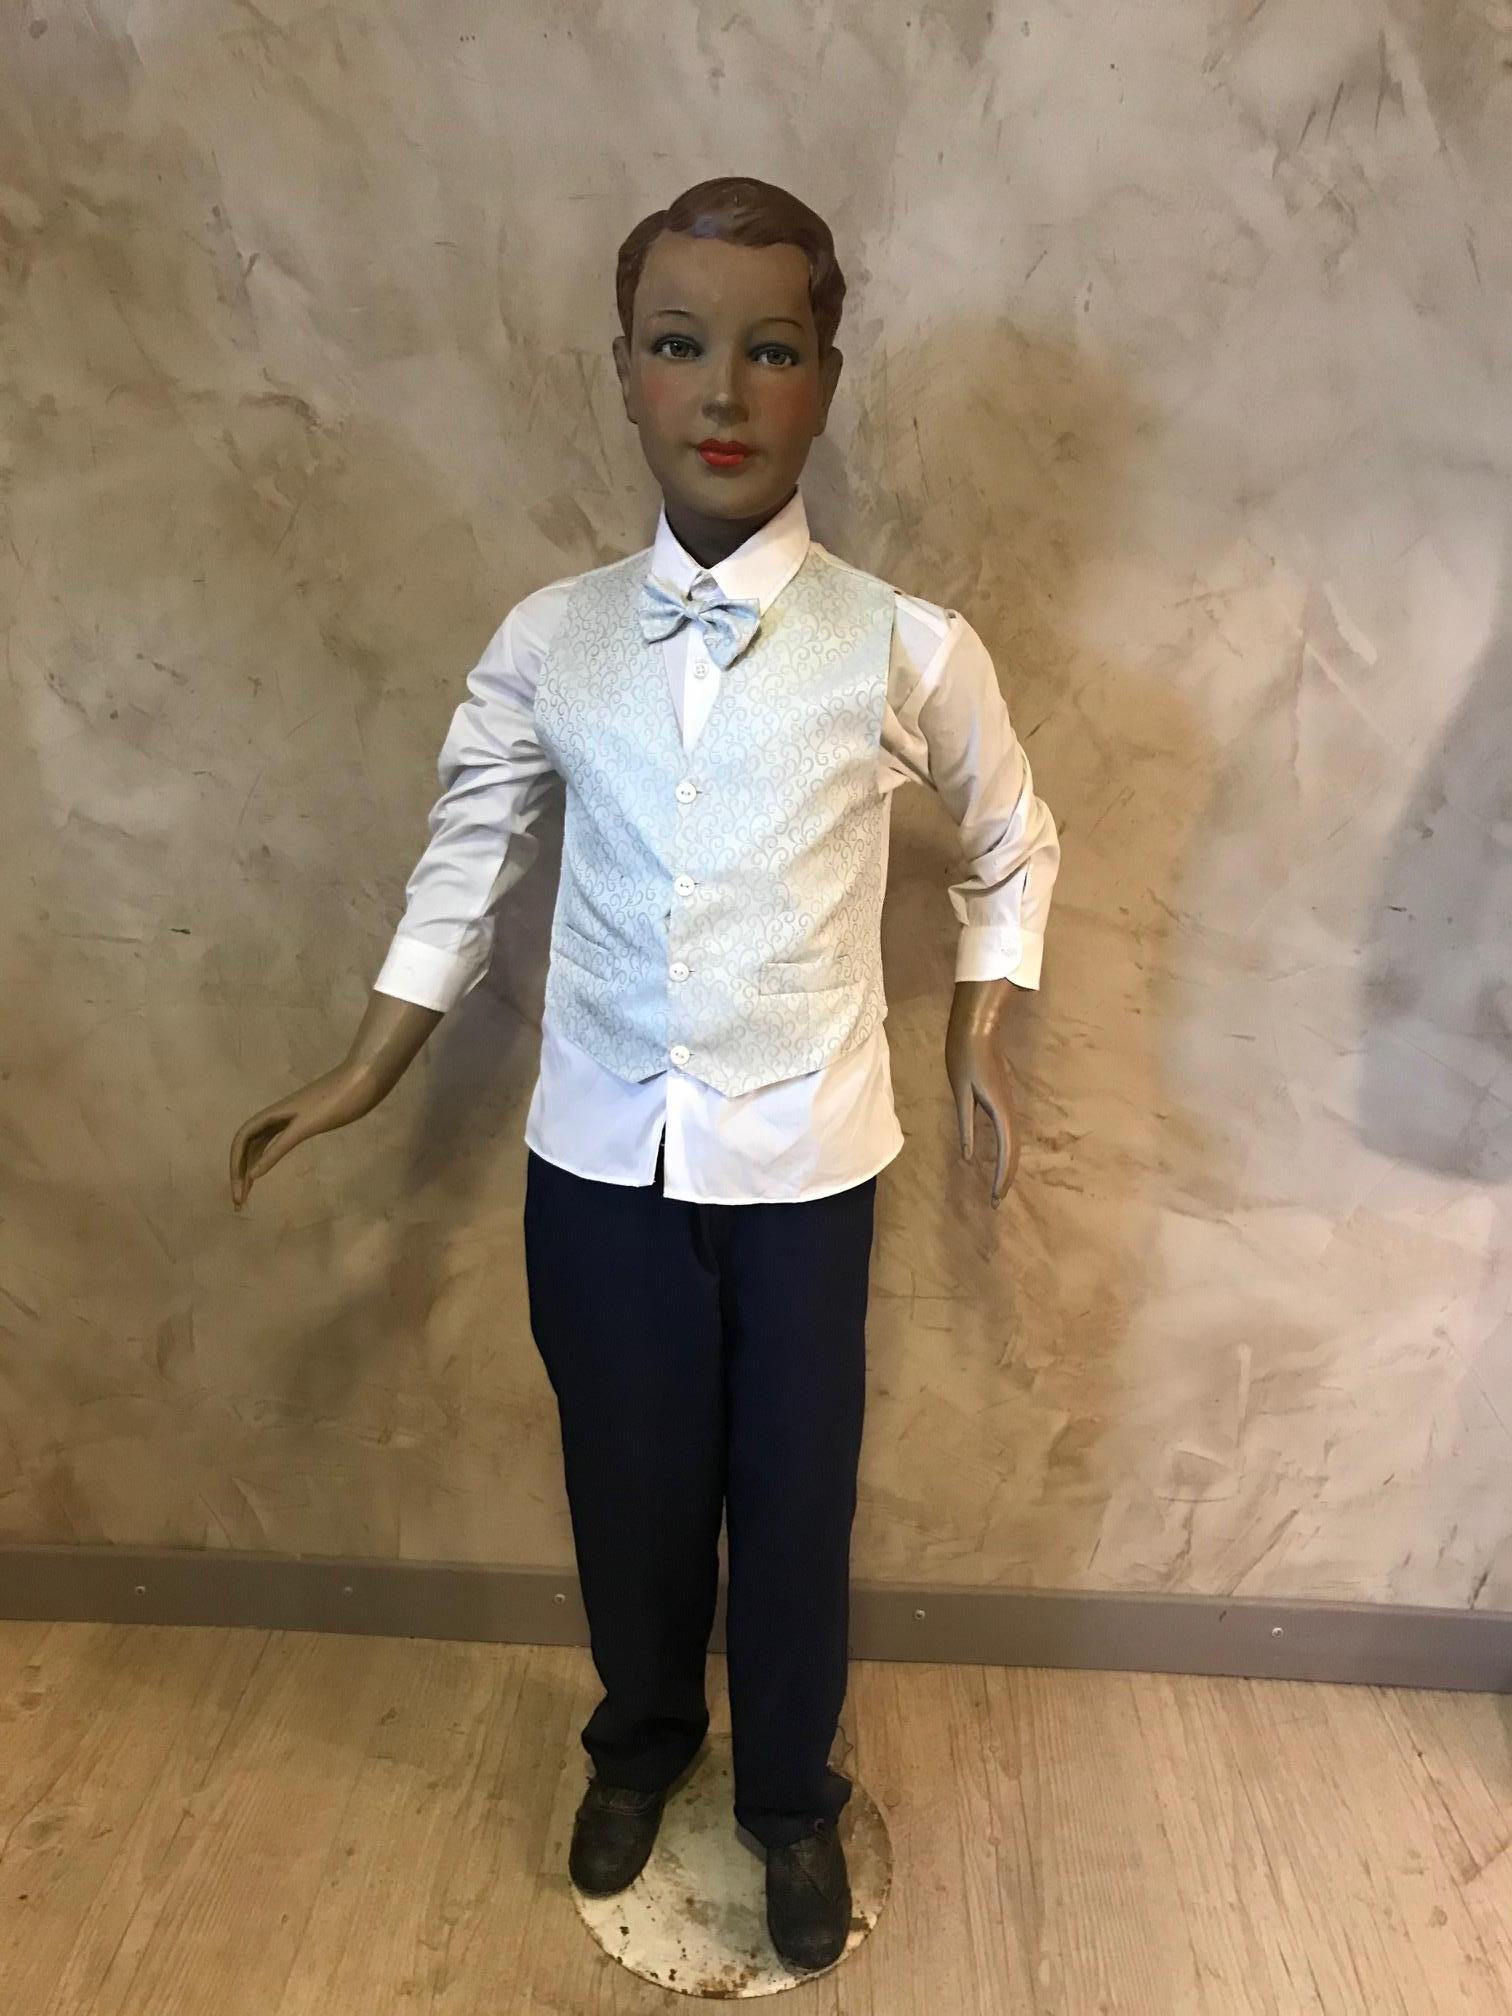 life size child mannequin